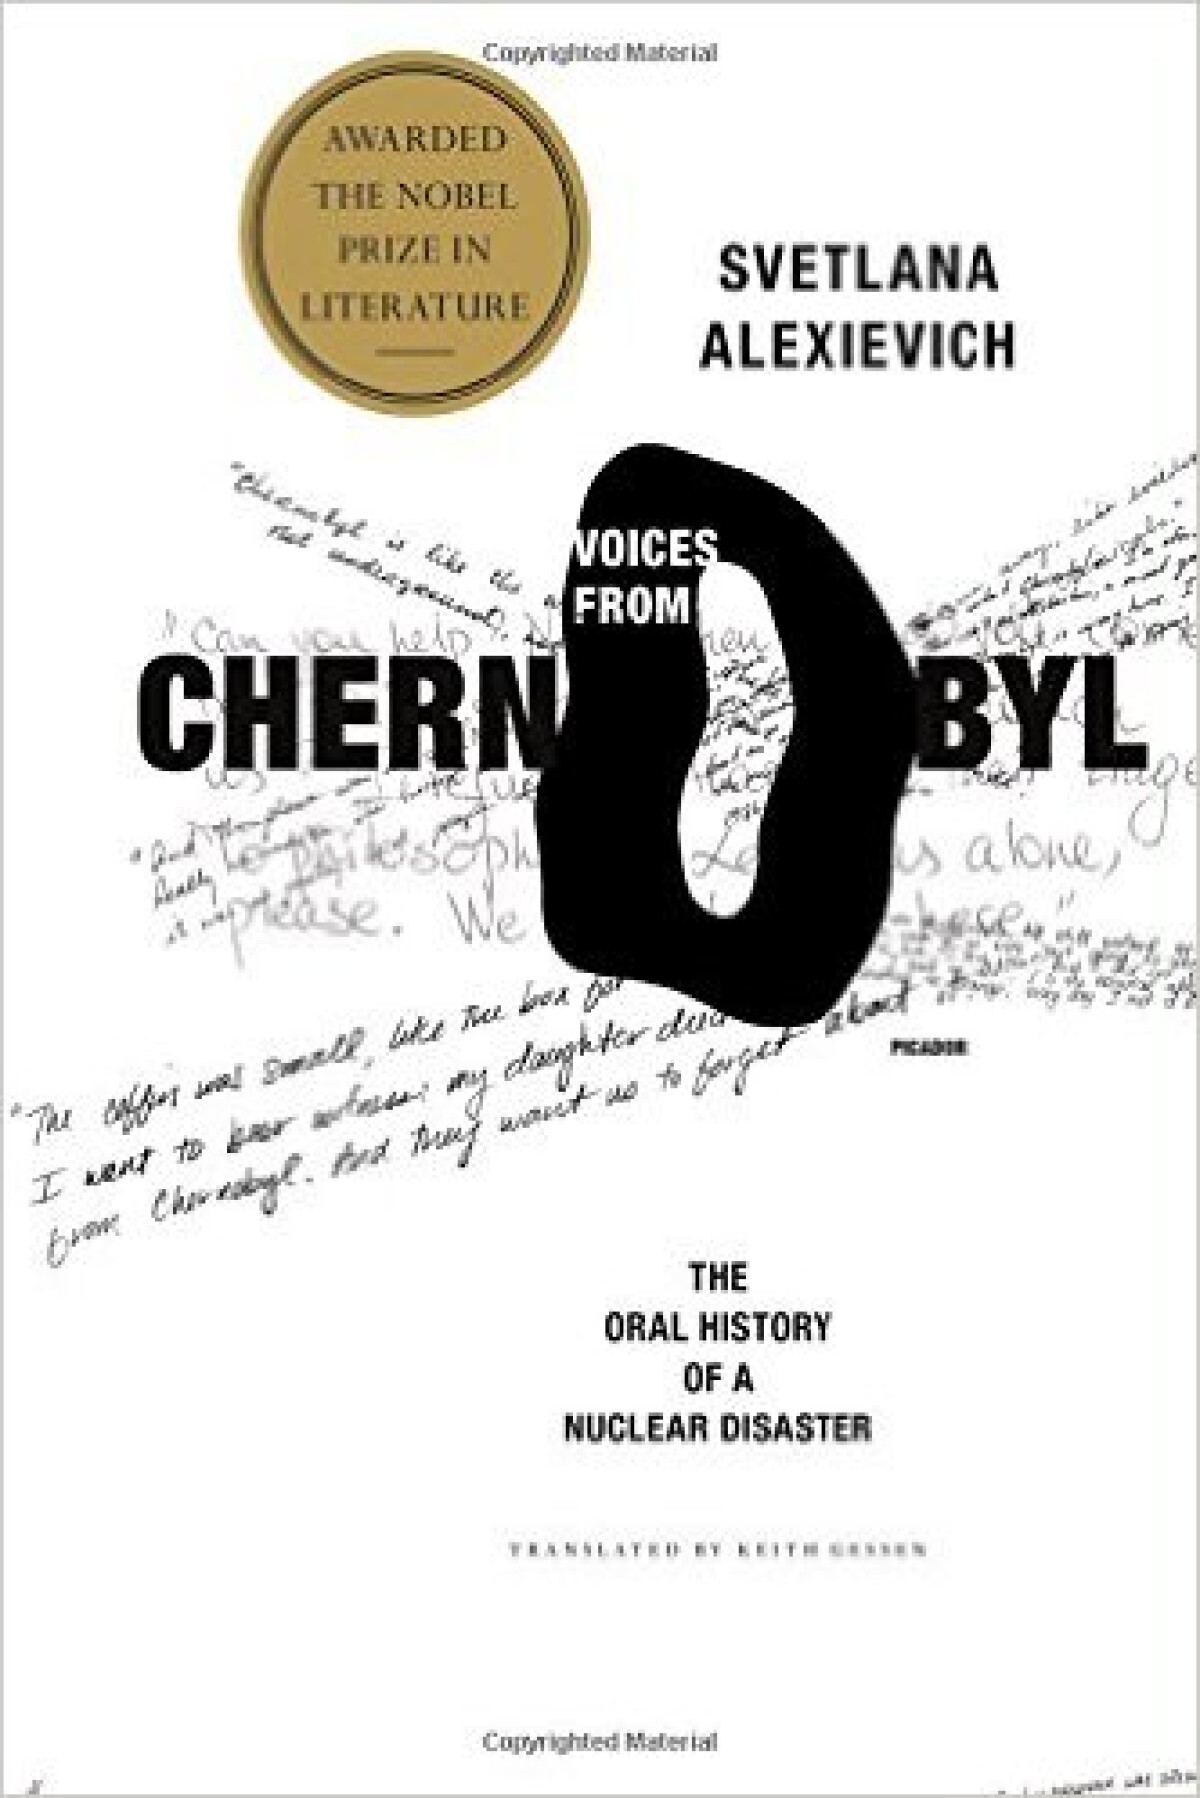 The Chernobyl prayer